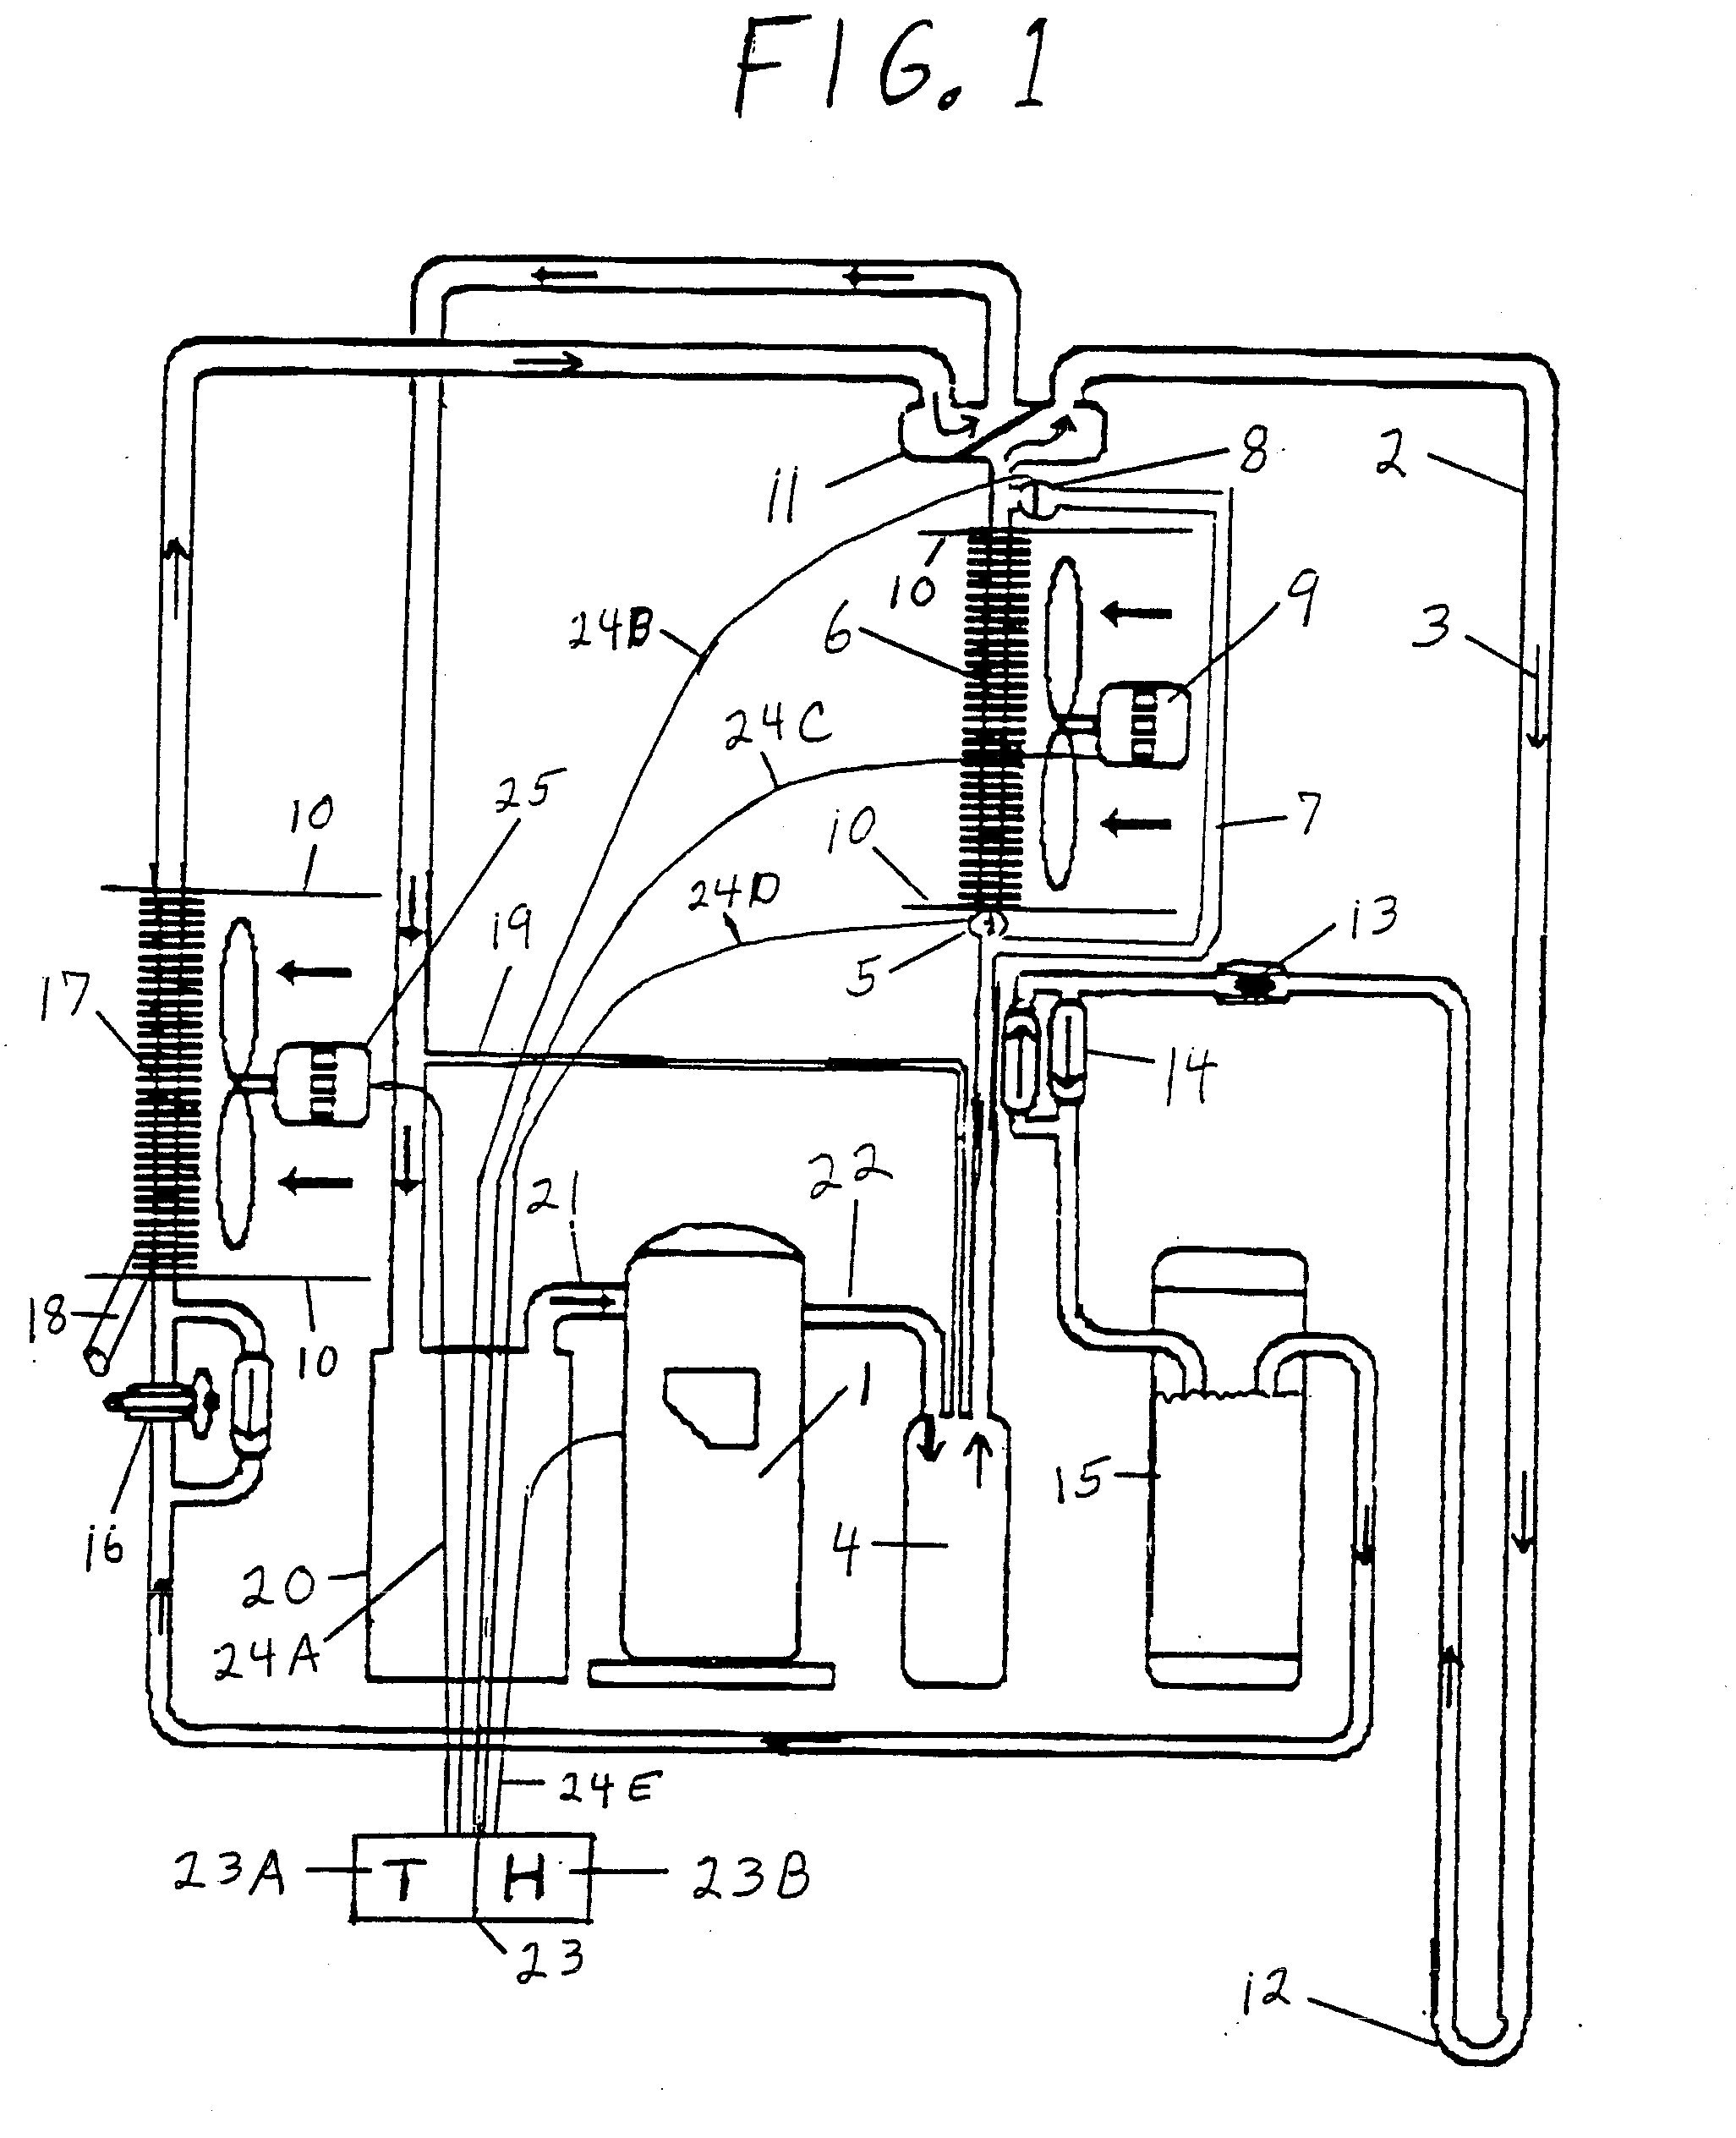 Heat Pump Dehumidification System